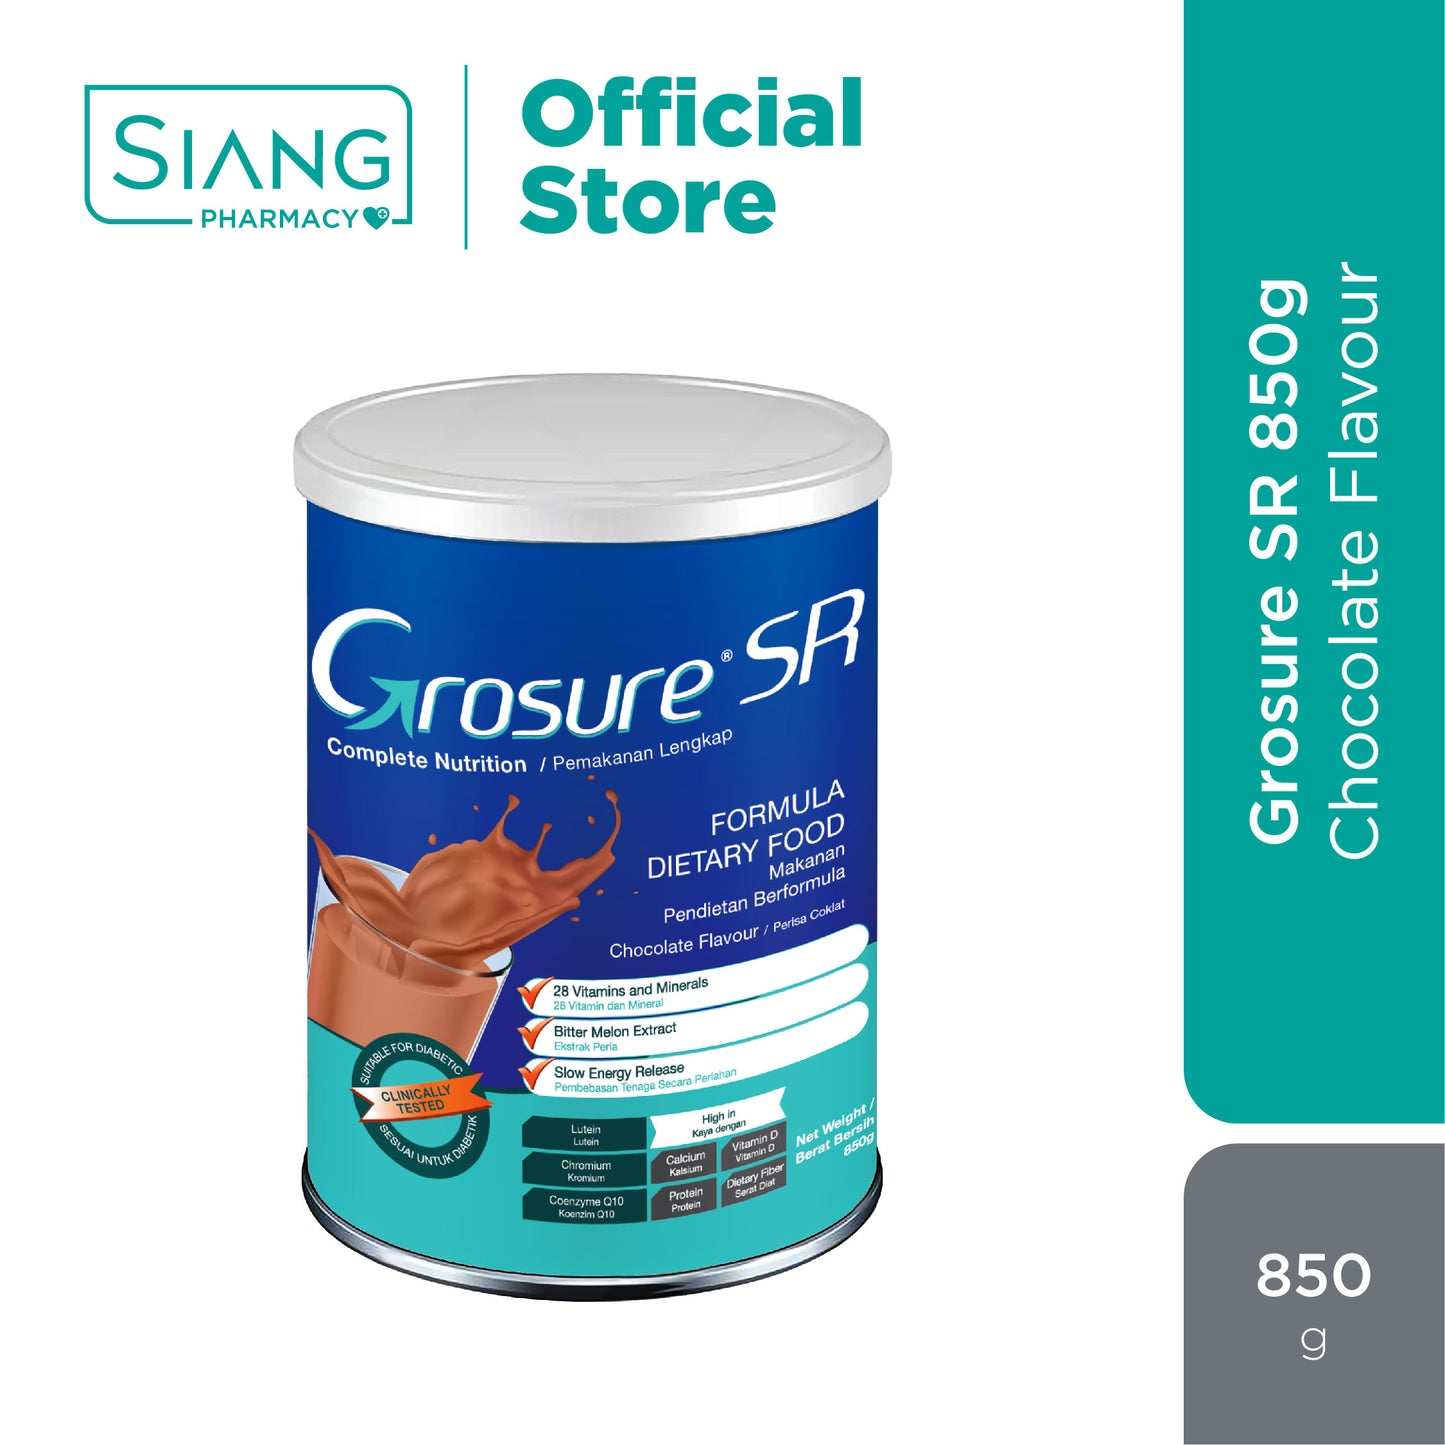 Grosure® SR 850g Vanilla/Chocolate